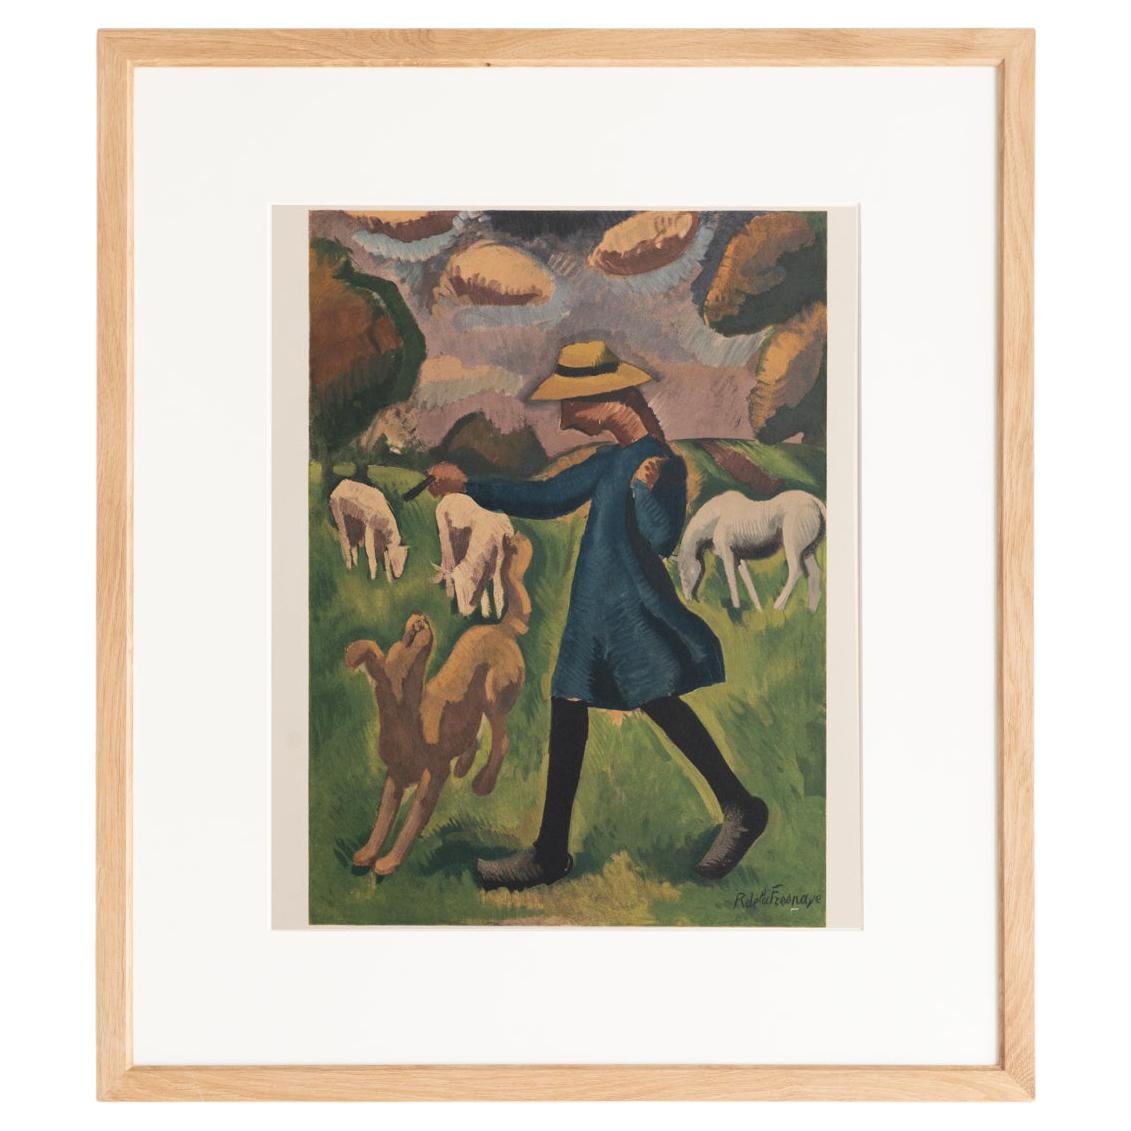 Roger de la Fresnaye 'La Gardeuse de Moutons' Framed Lithography, circa 1968